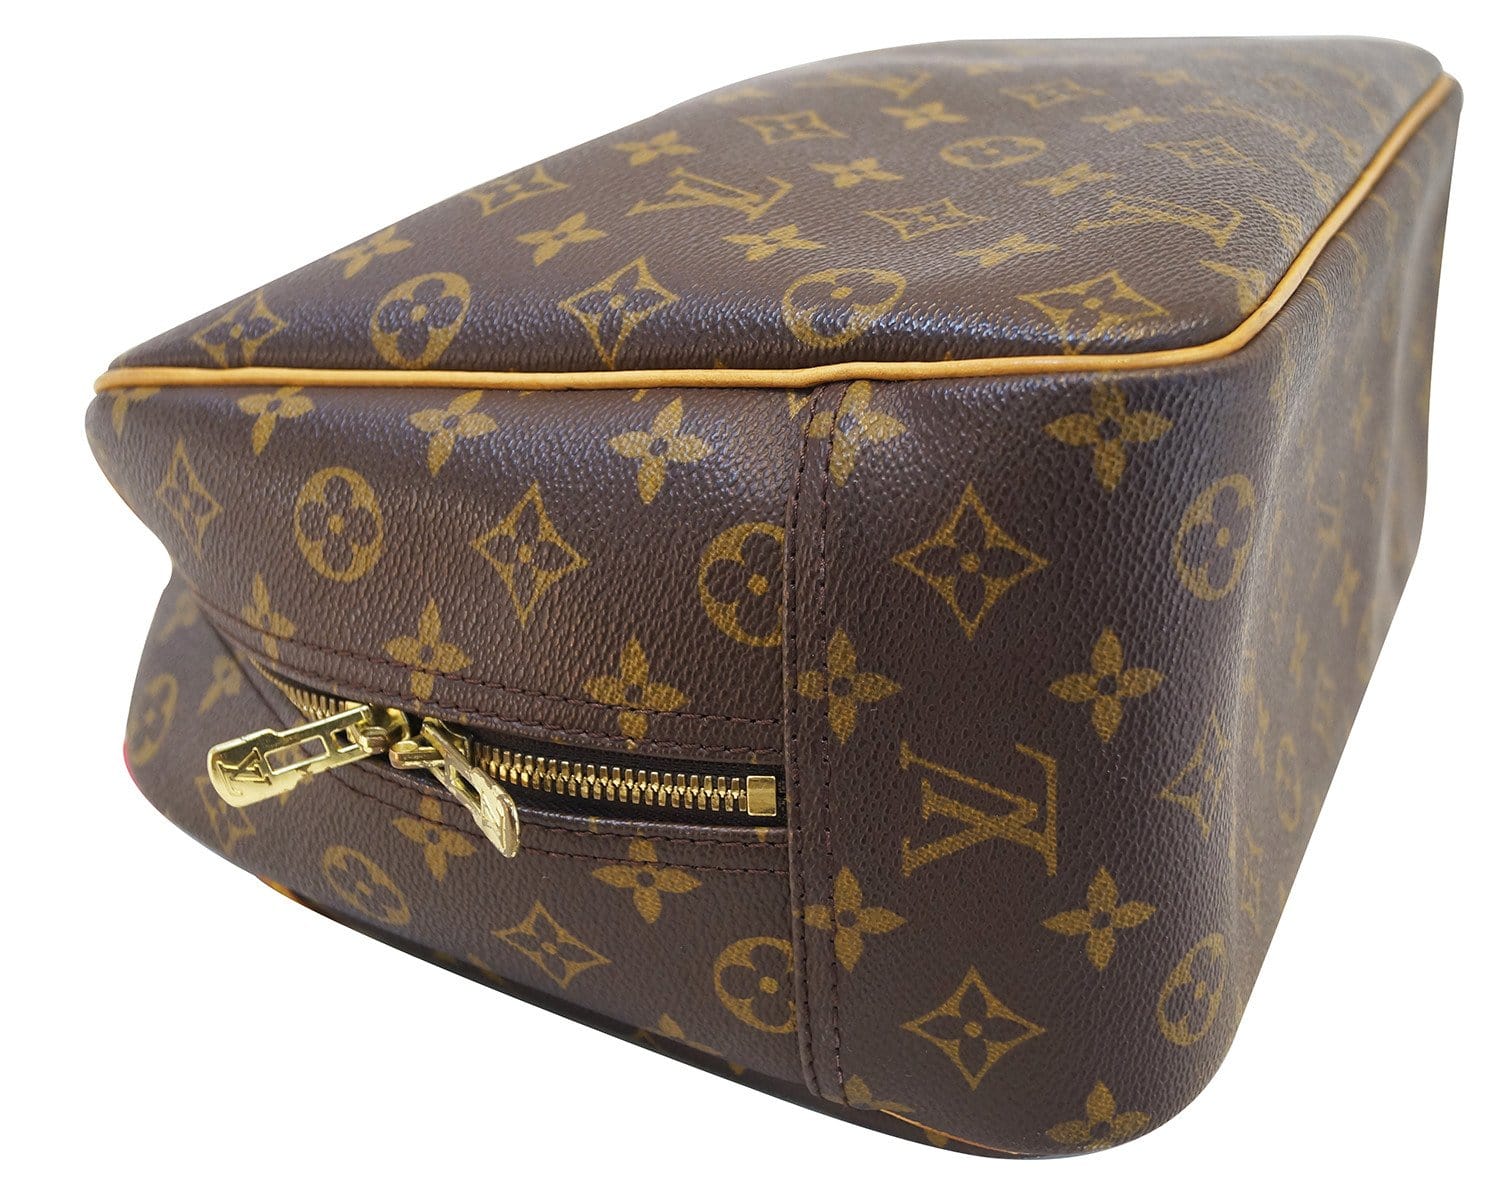 ❣BNIB❣️Louis Vuitton Deauville Mini Monogram Bag